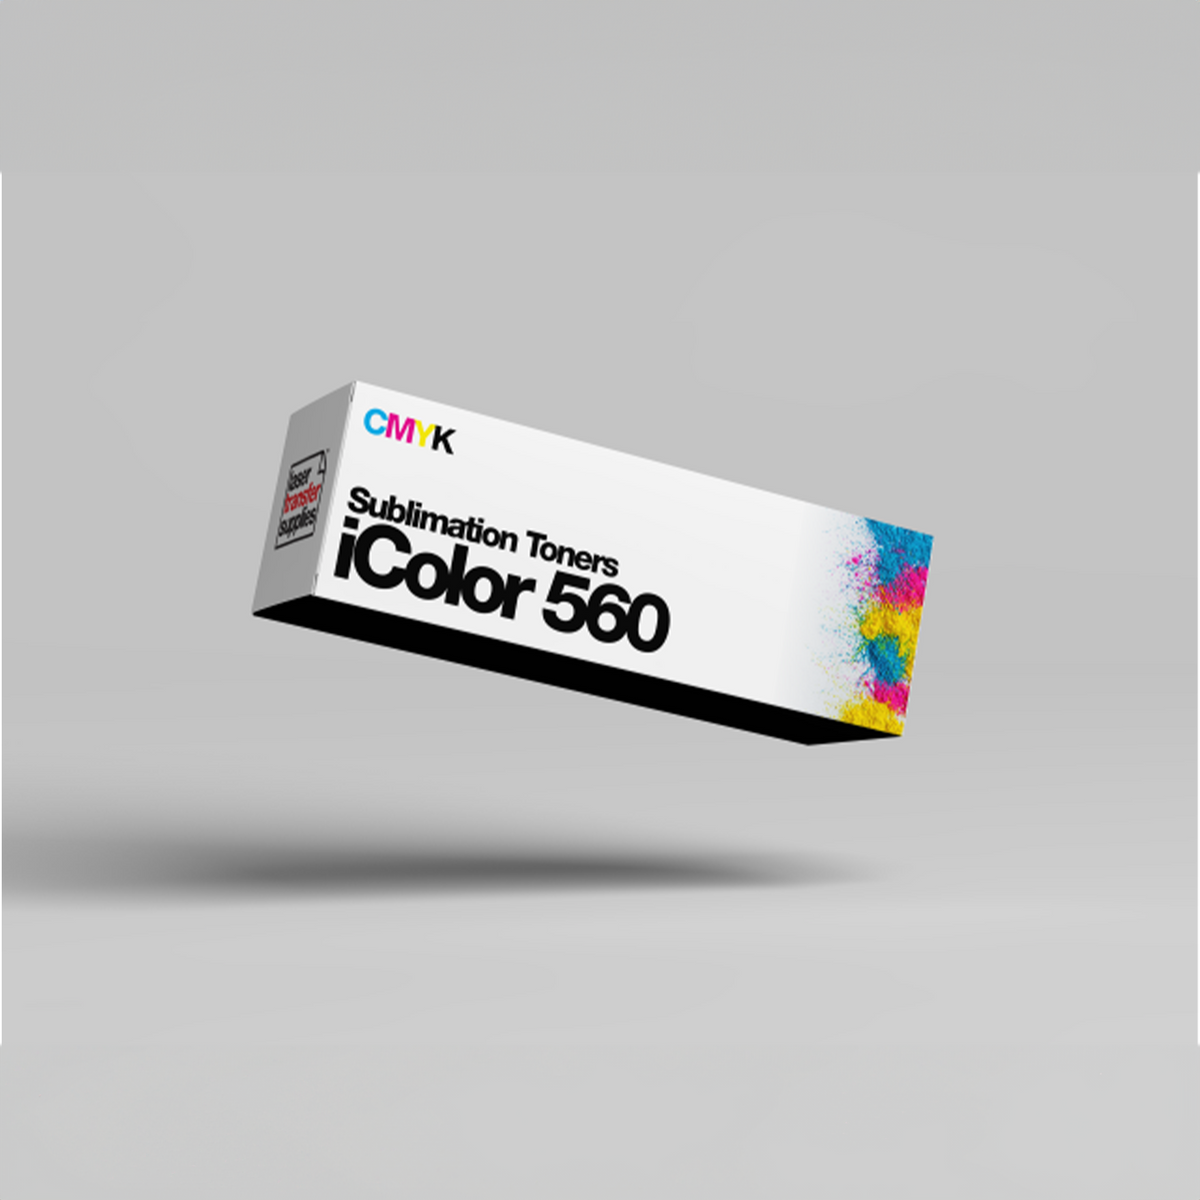 IColor 560 Sublimation Toner